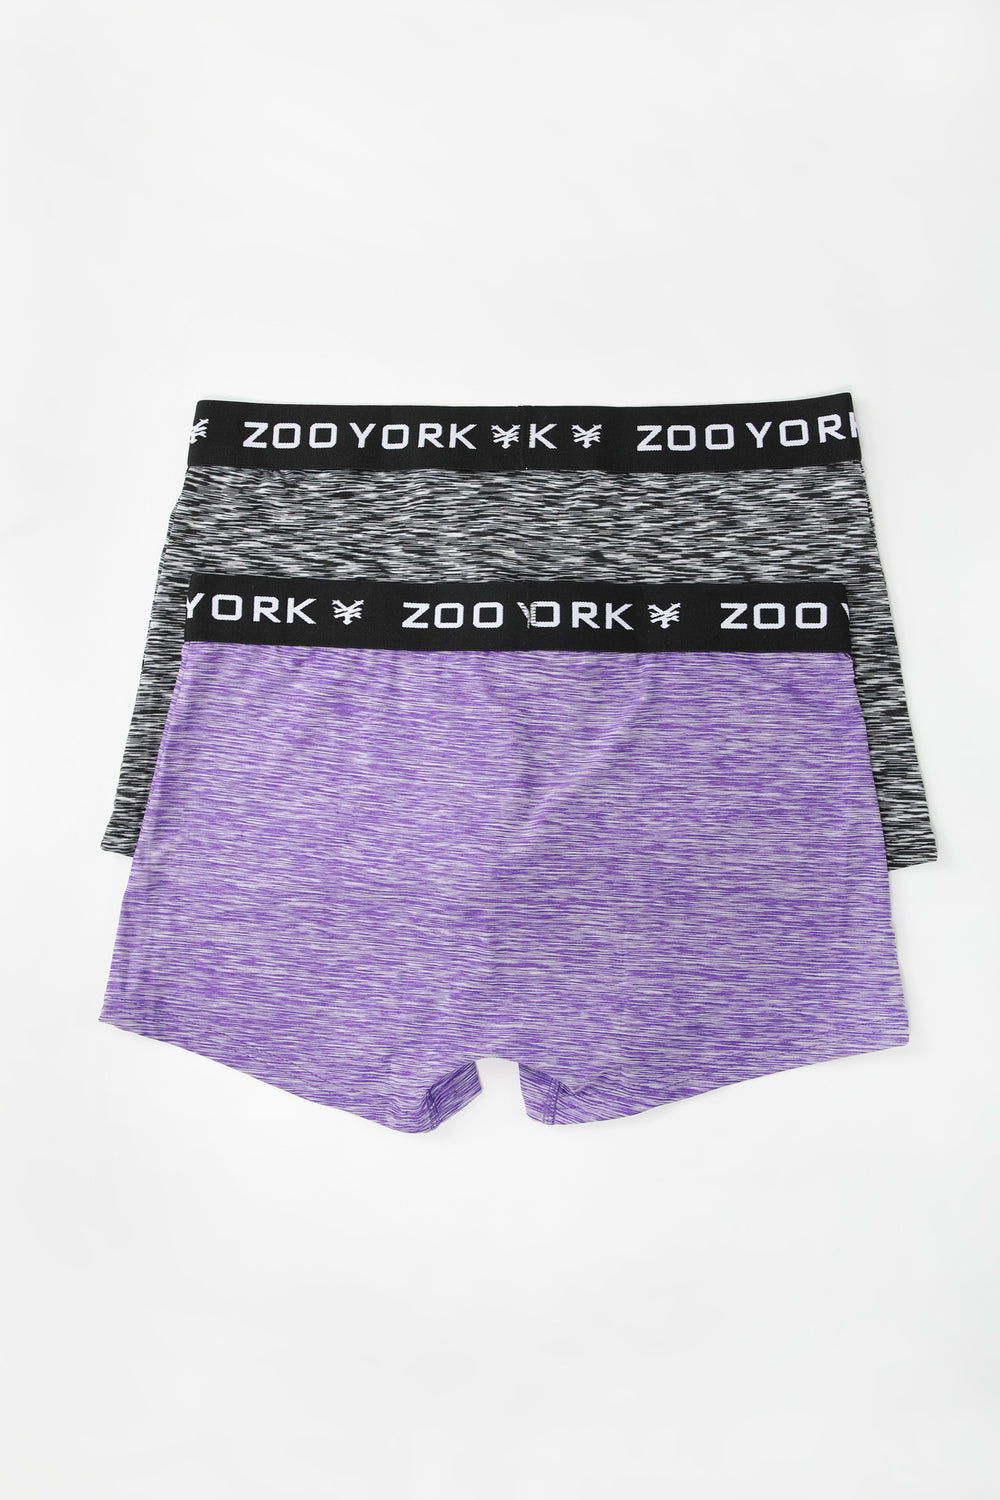 Zoo York Mens 2-Pack Space Dye Boxer Briefs Purple